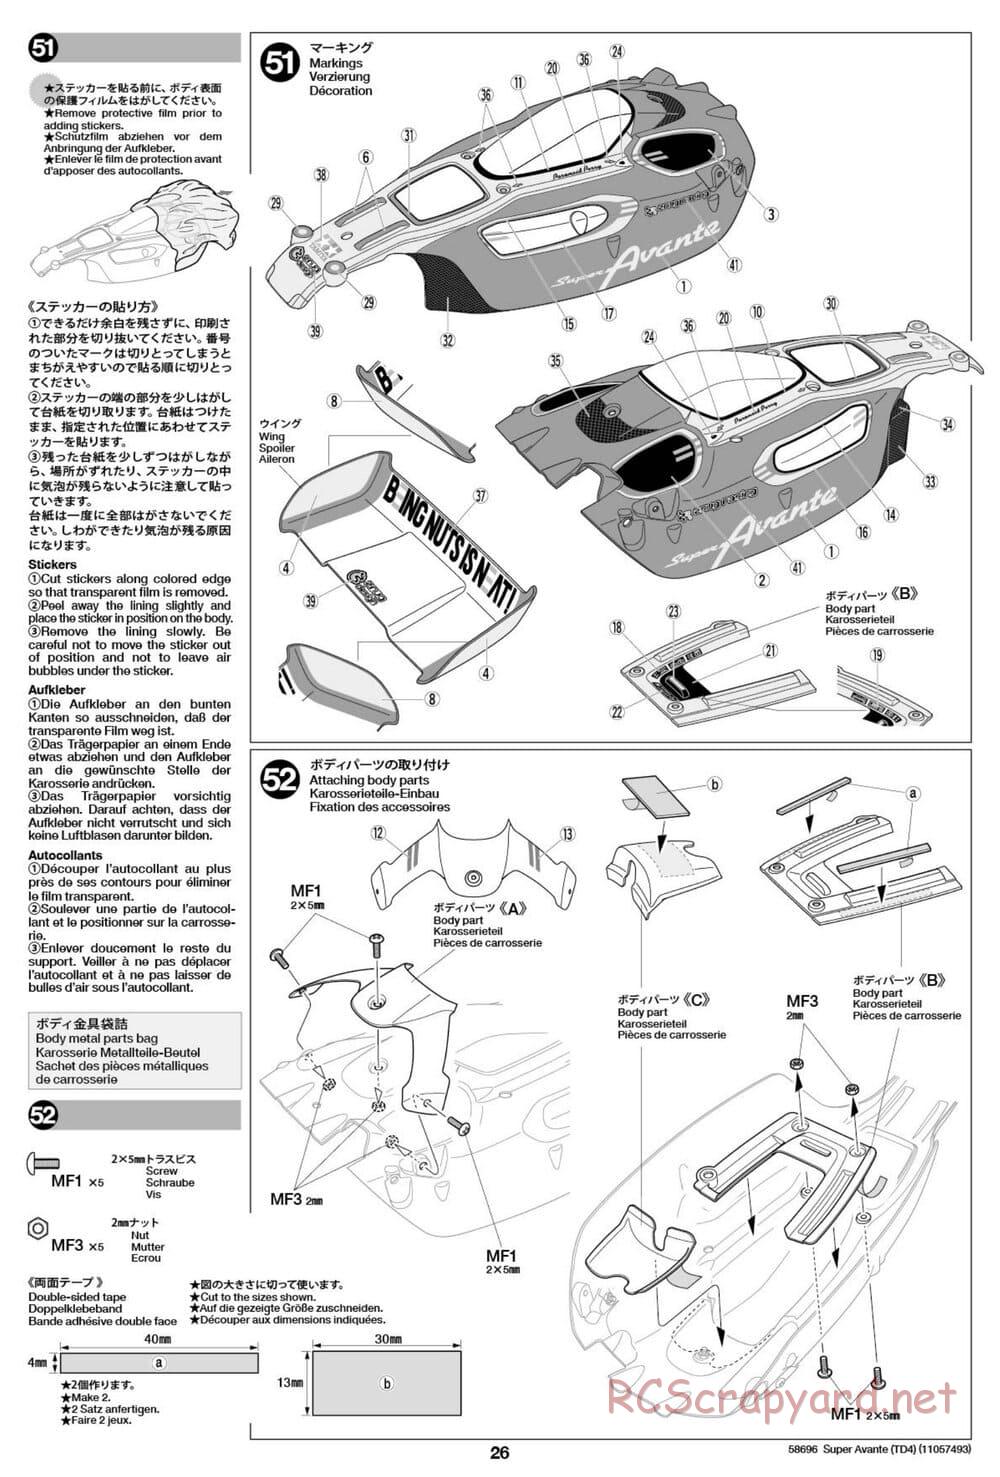 Tamiya - Super Avante - TD4 Chassis - Manual - Page 27